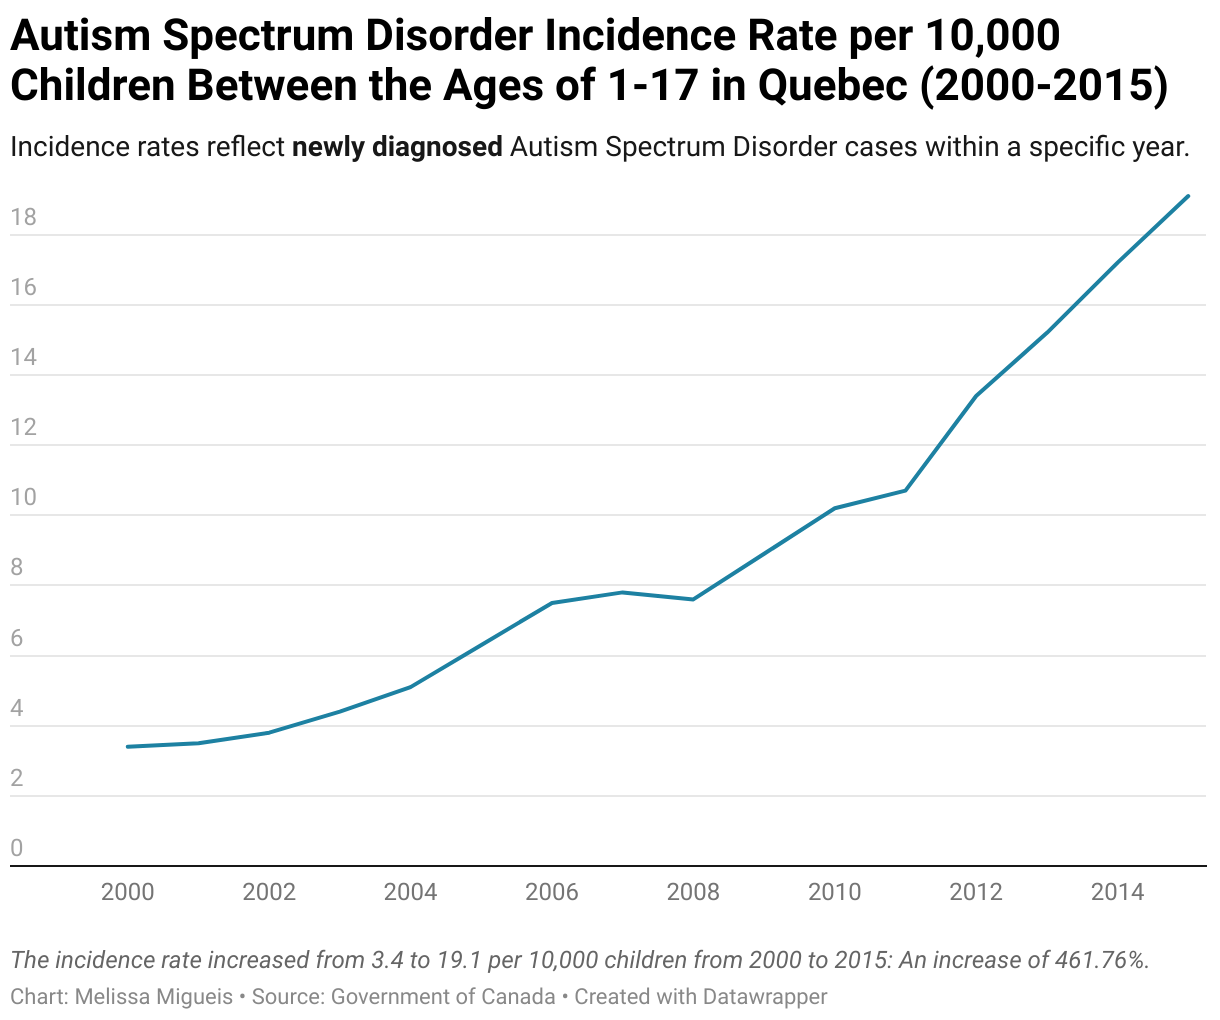 Number of autism spectrum disorder diagnoses in Quebec